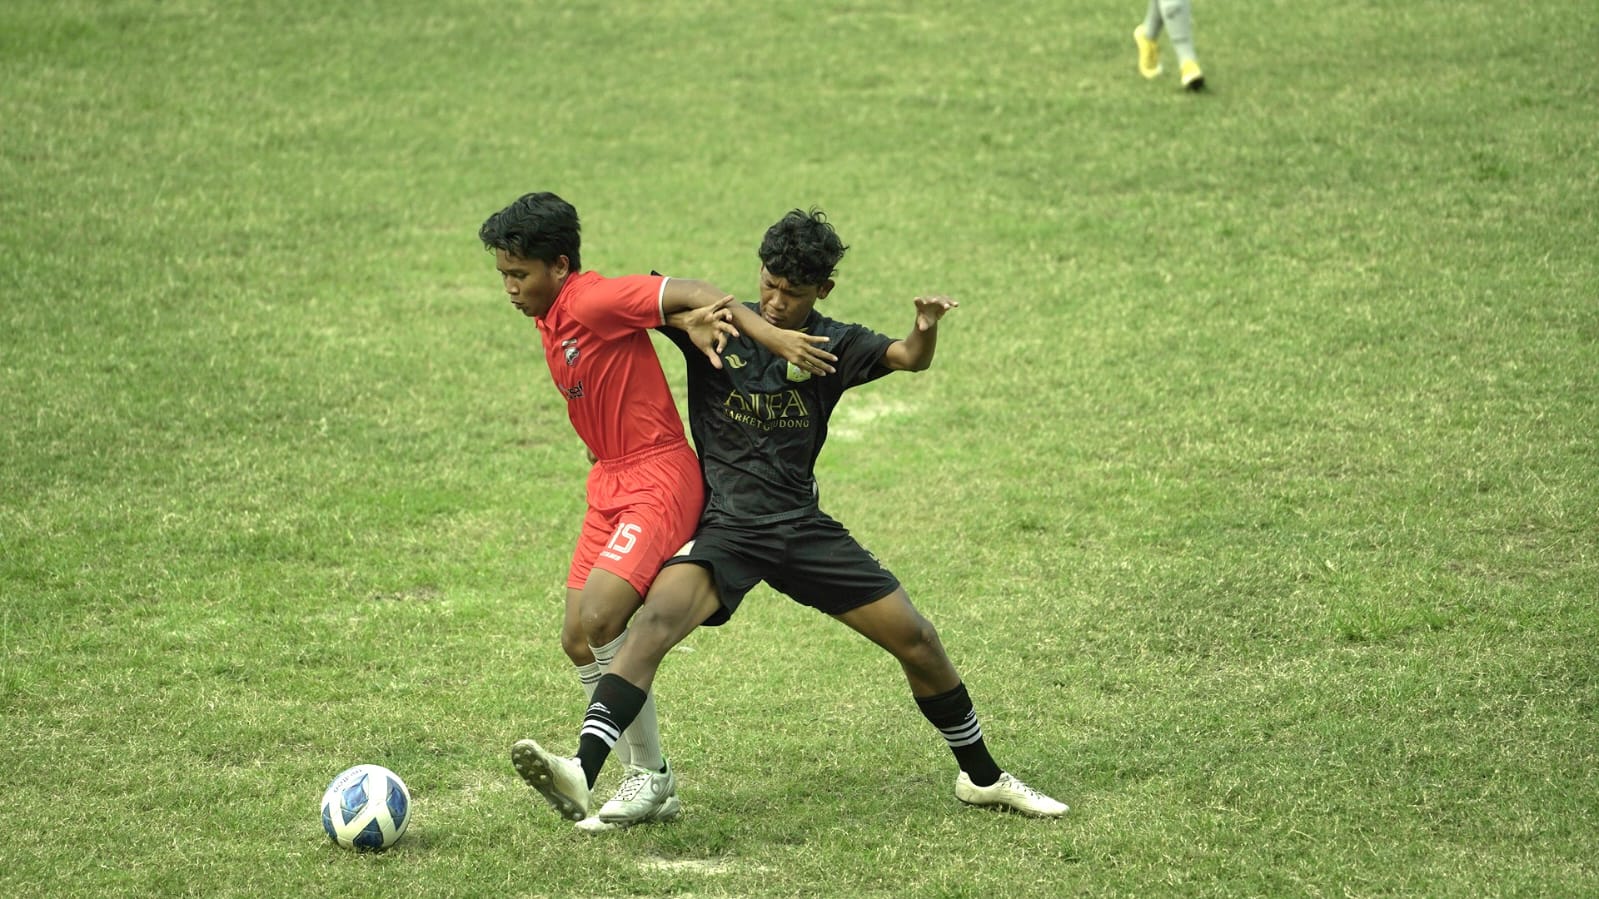 PSLS Lhokseumawe tantang Persib Bandung di final